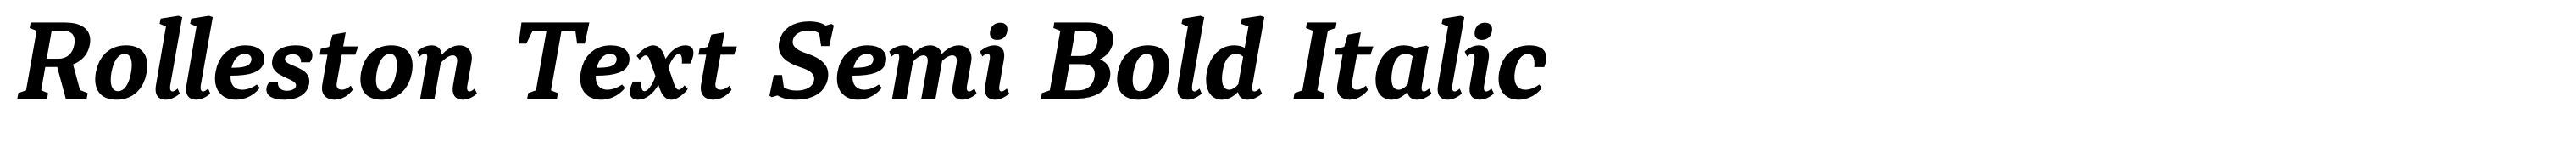 Rolleston Text Semi Bold Italic